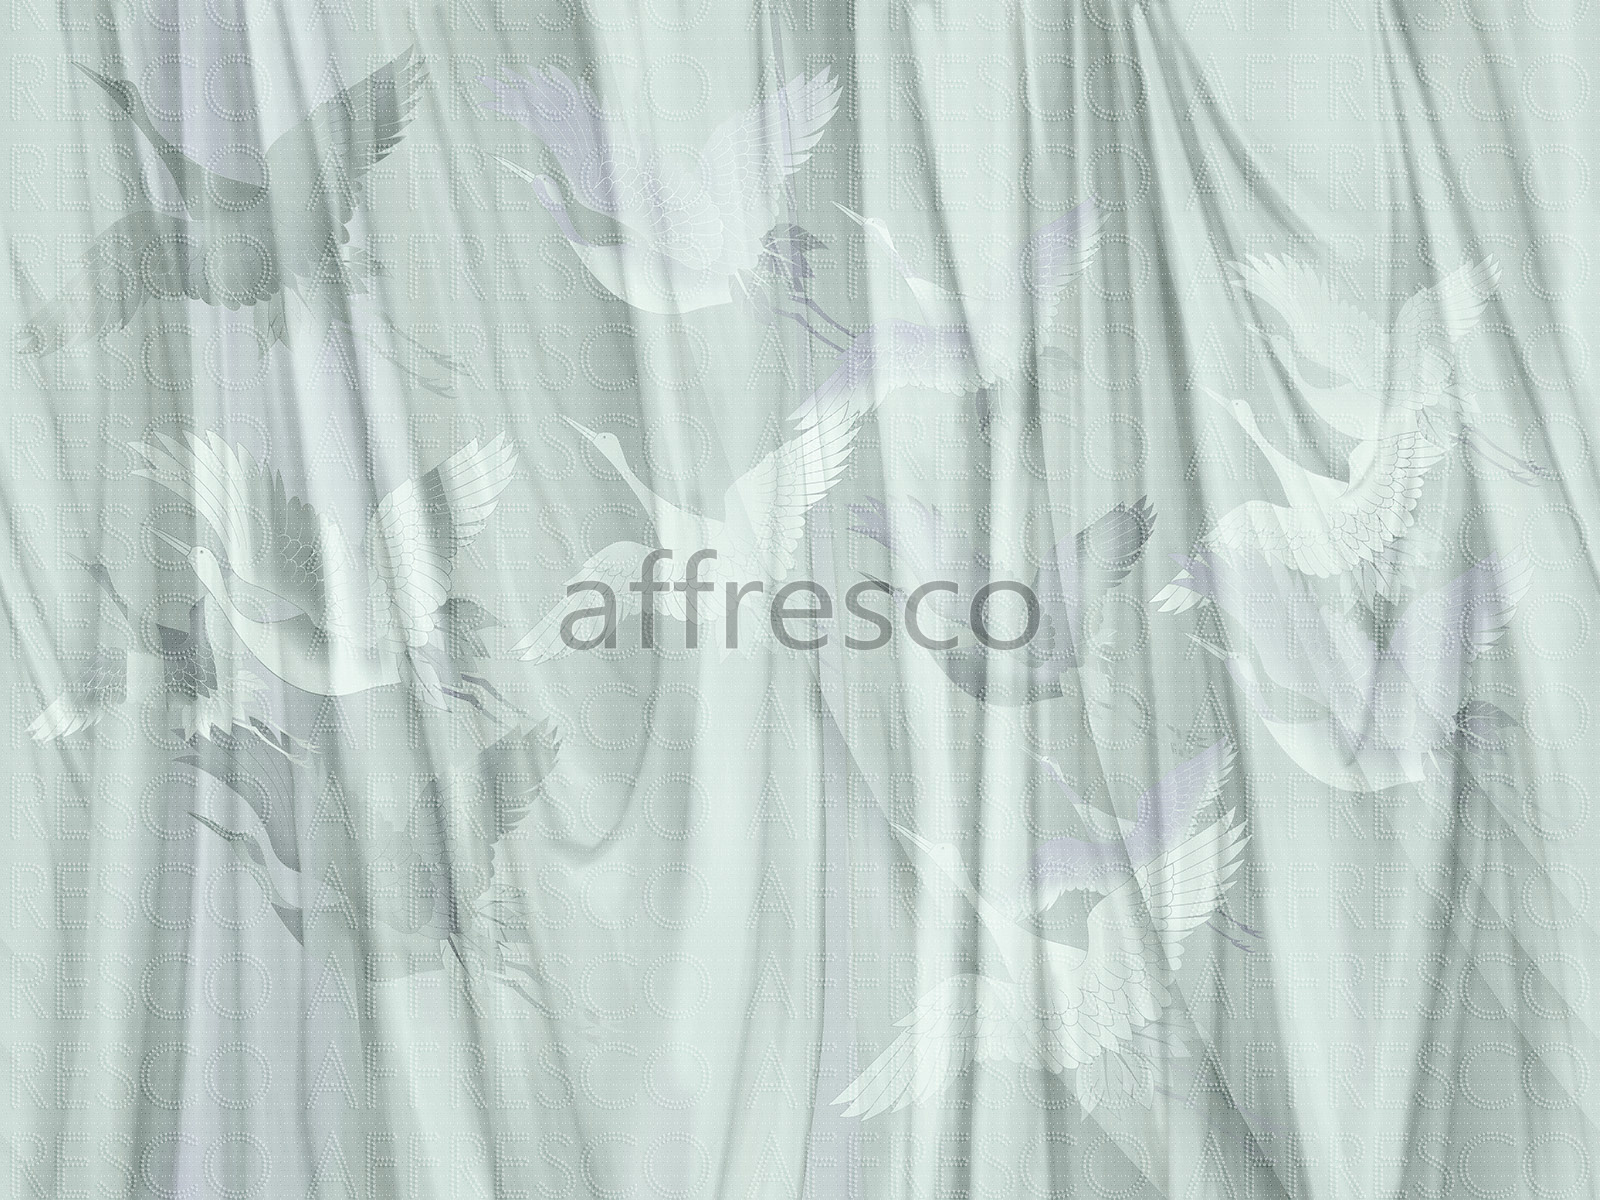 RE936-COL4 | Fine Art | Affresco Factory